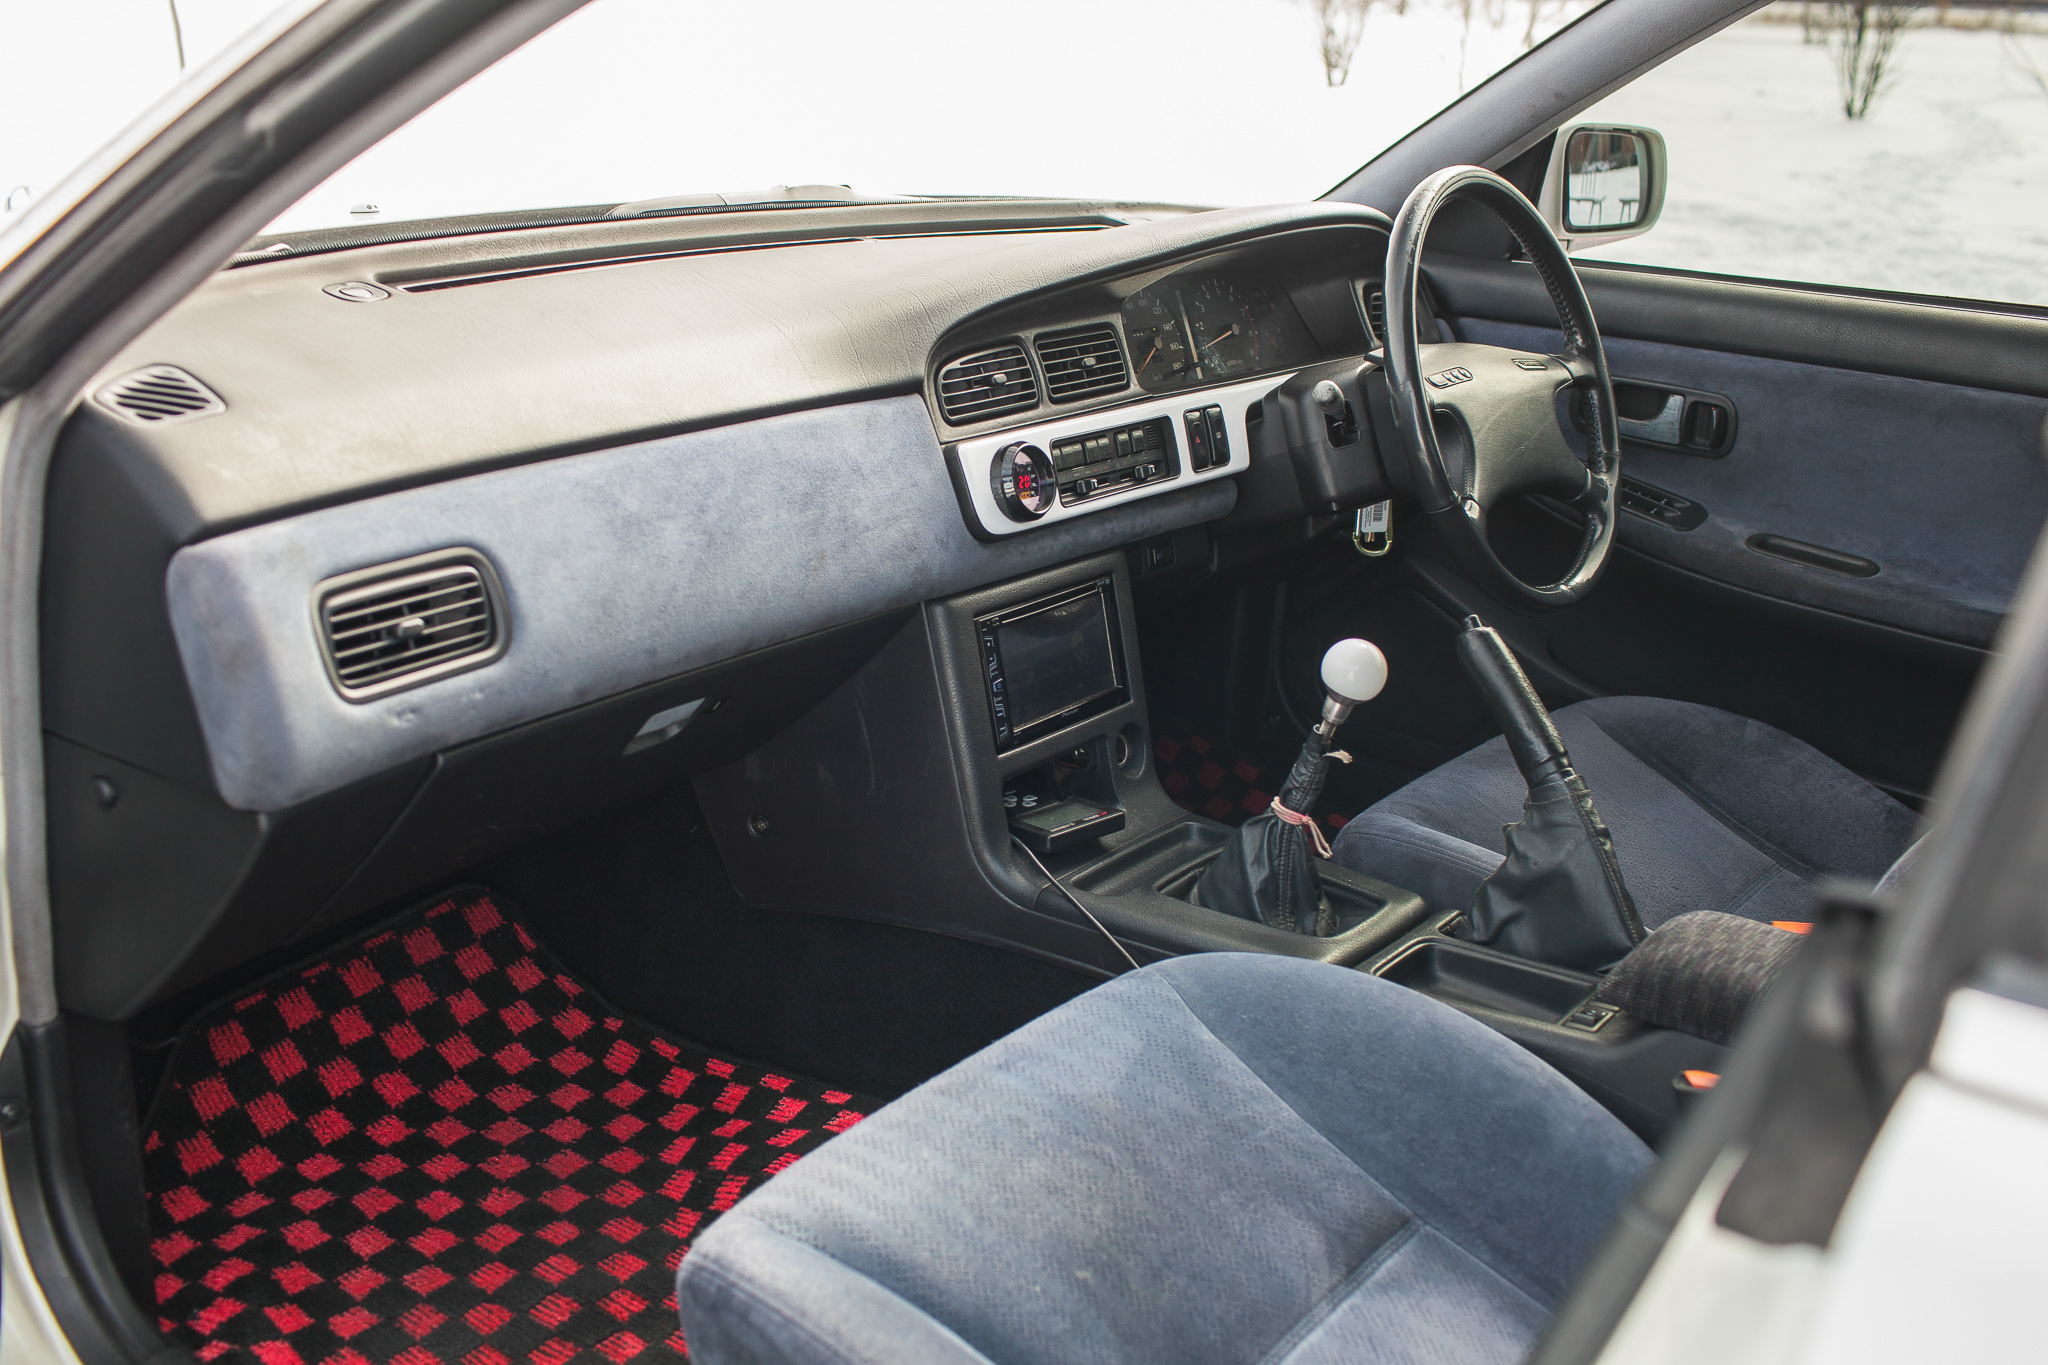 Nissan Laurel interior